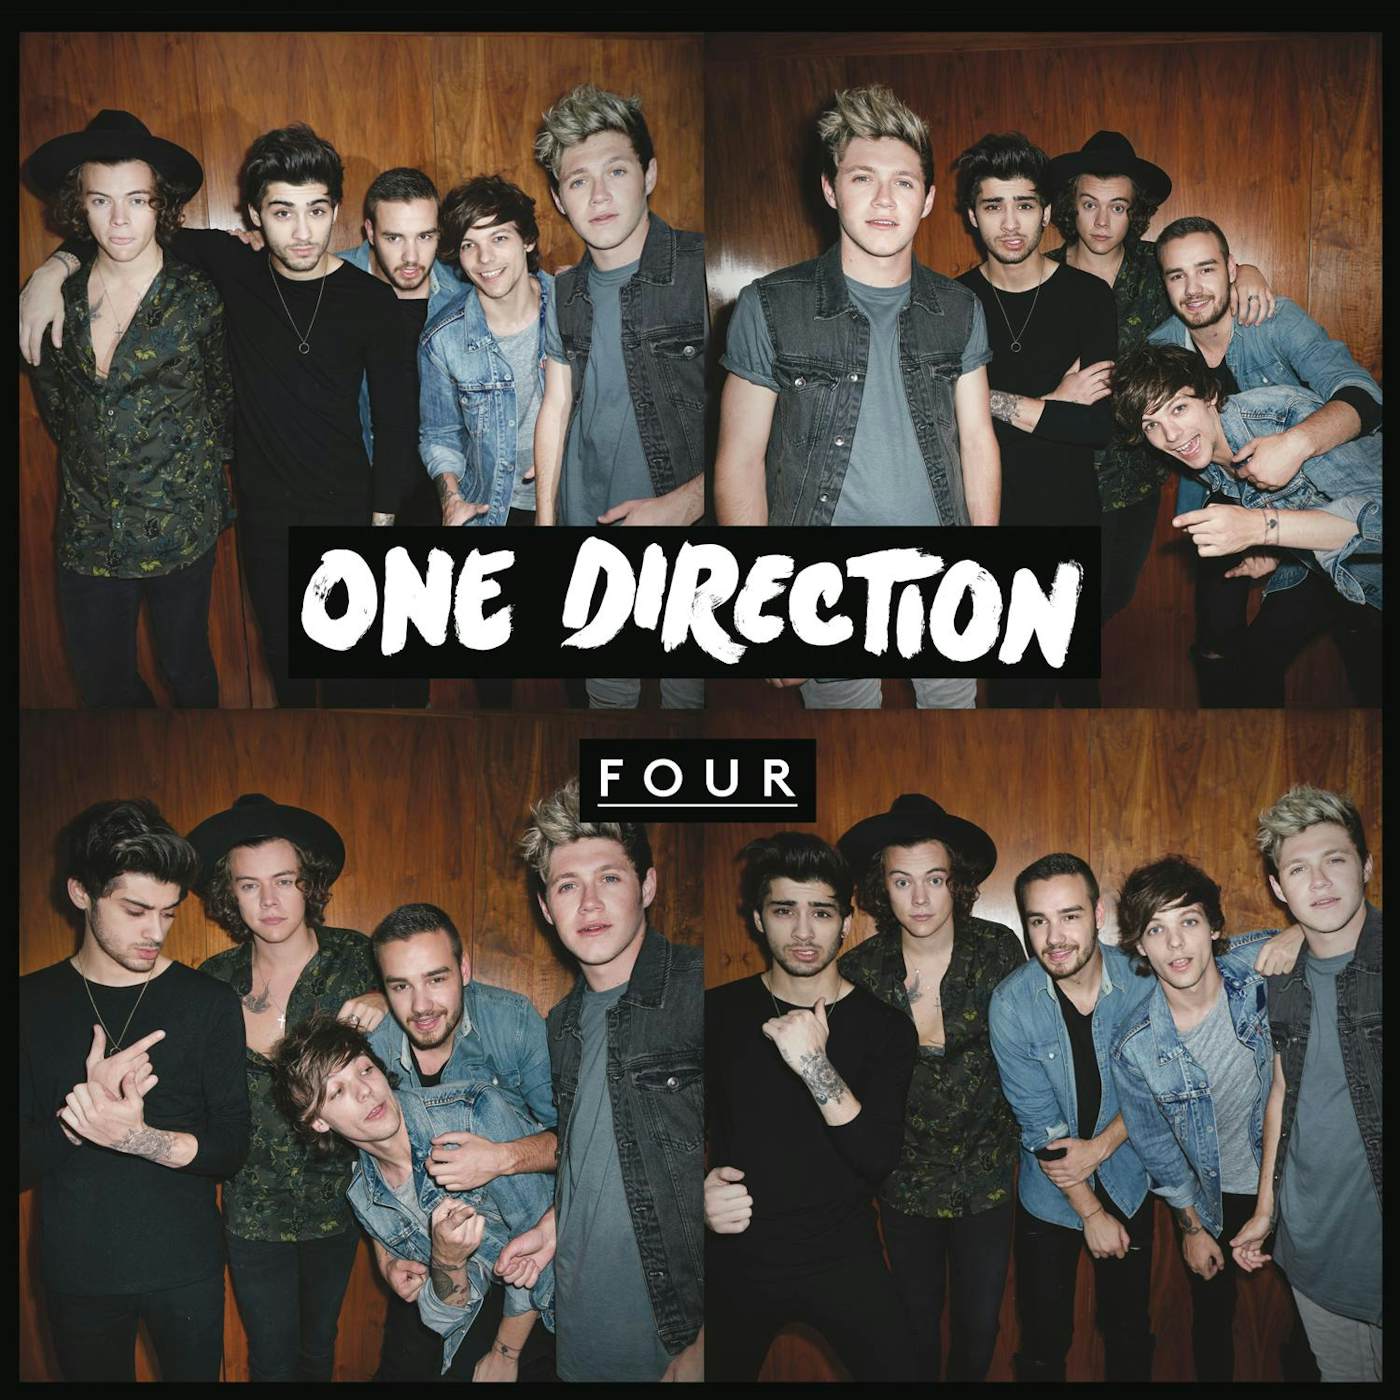 One Direction FOUR Vinyl Record - Gatefold Sleeve